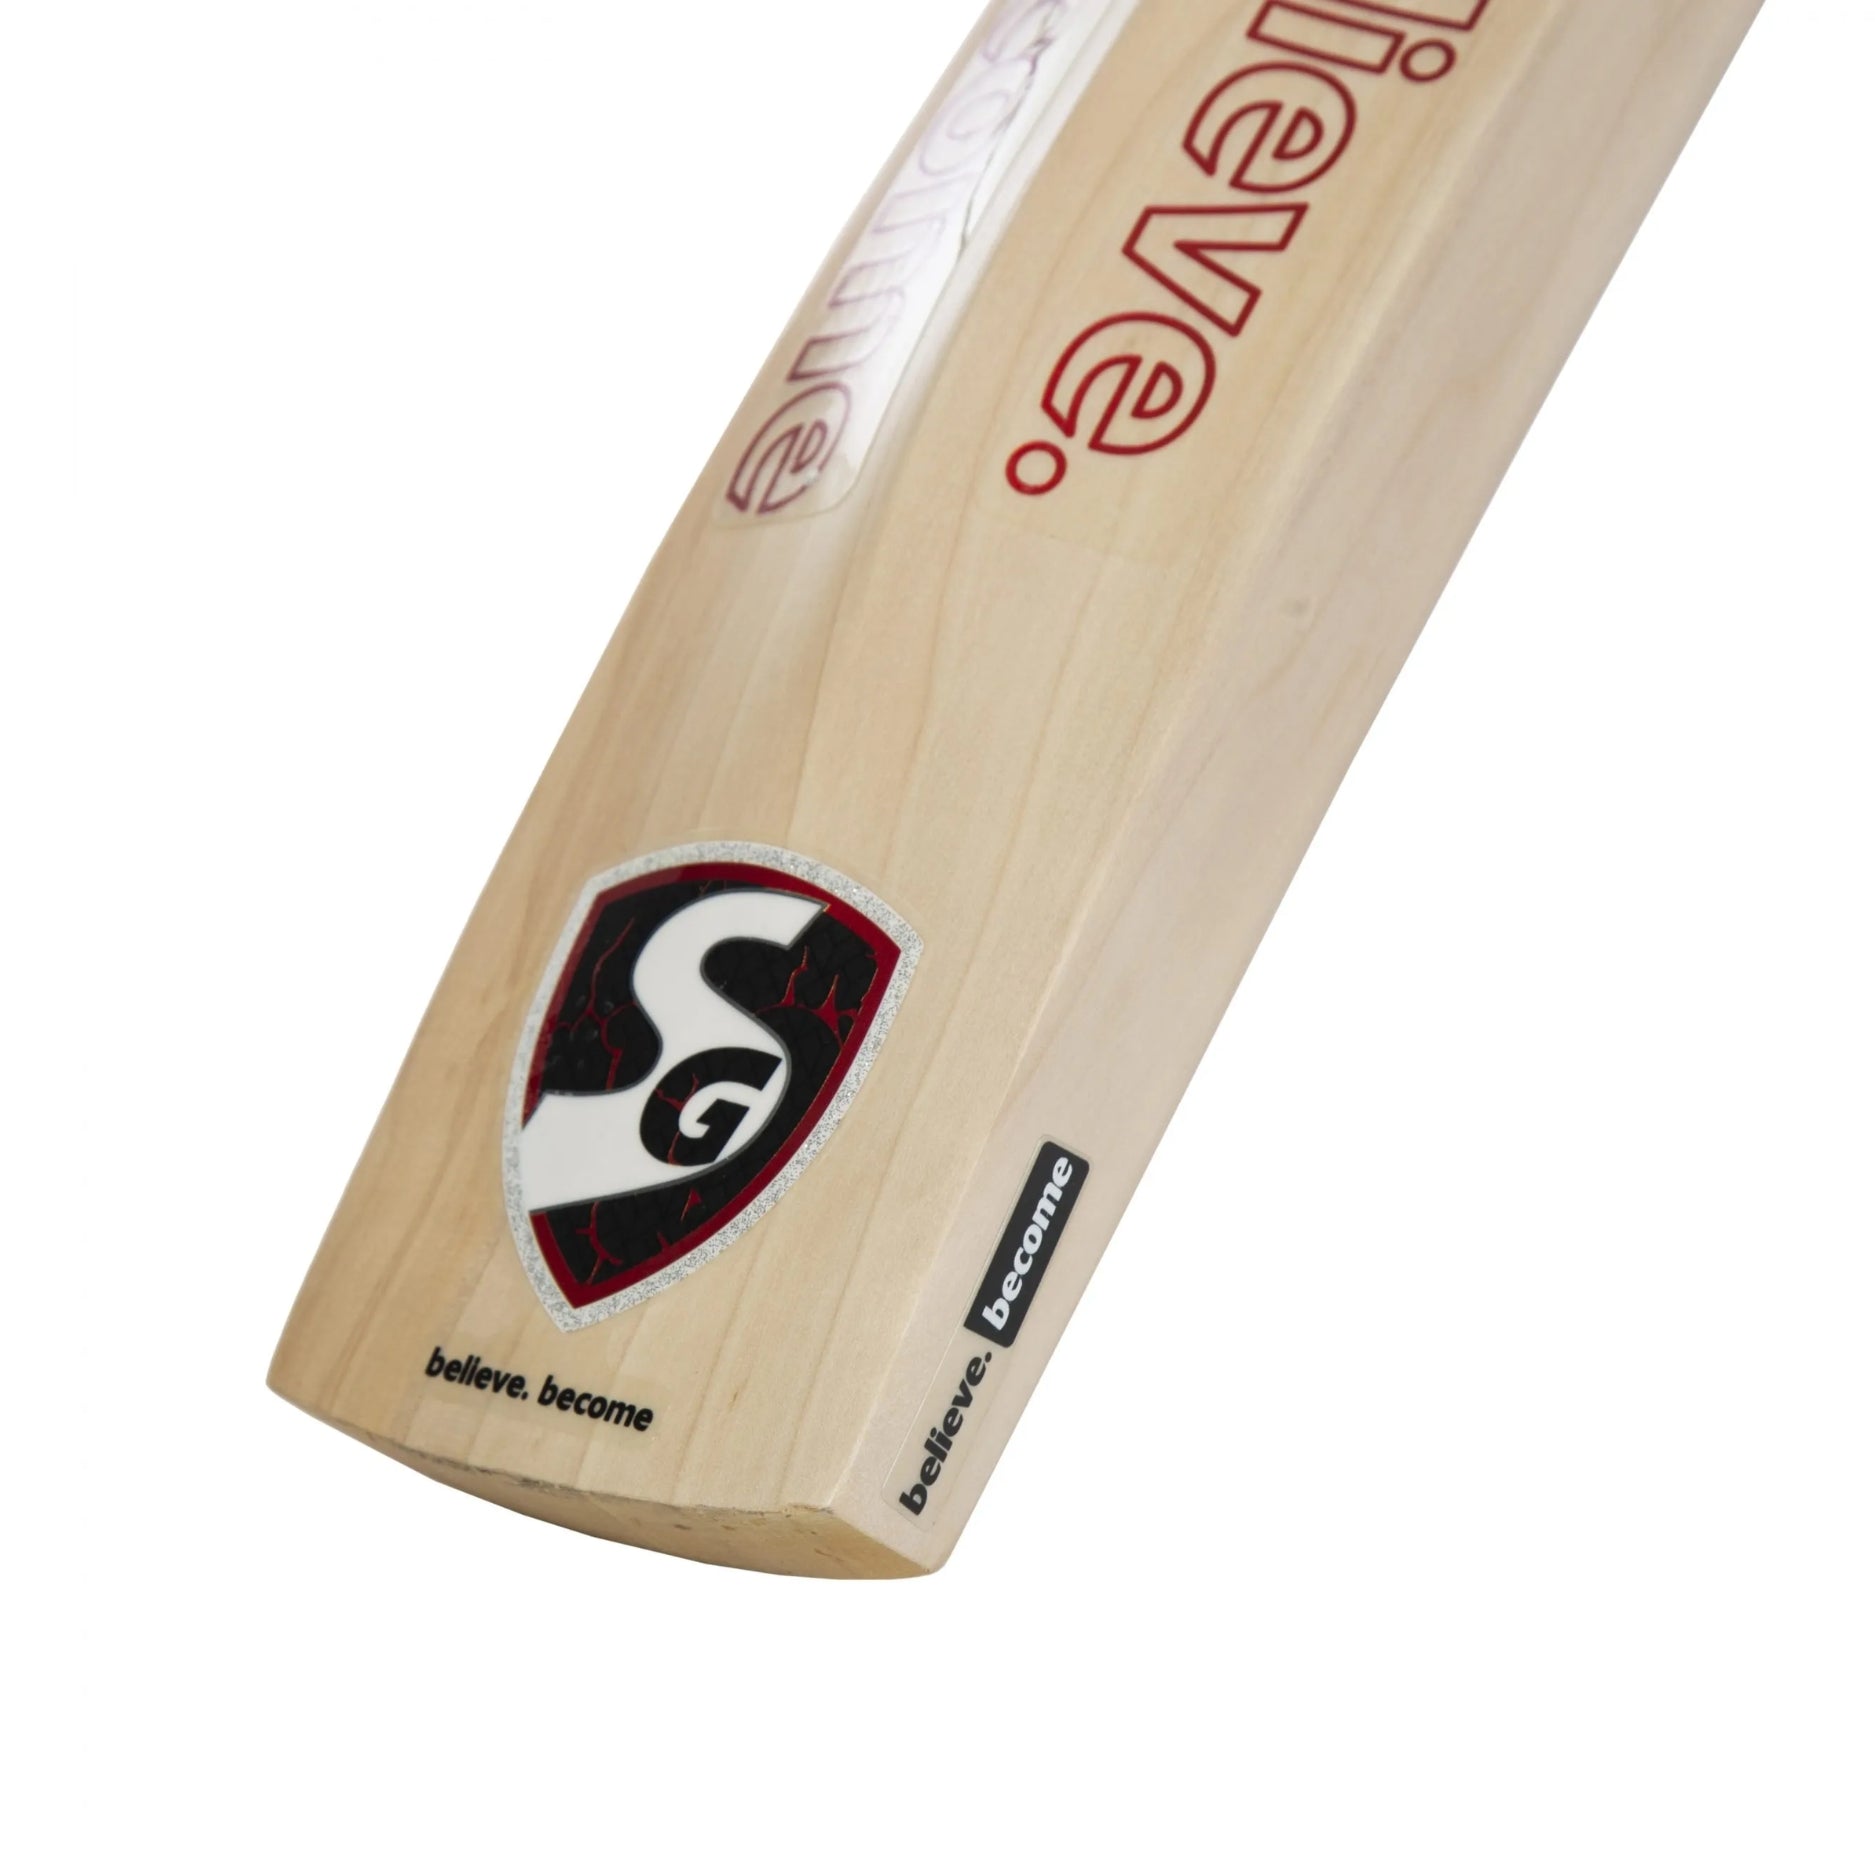 SG Cricket Bat, Model Roar Ultimate, English Willow, SH